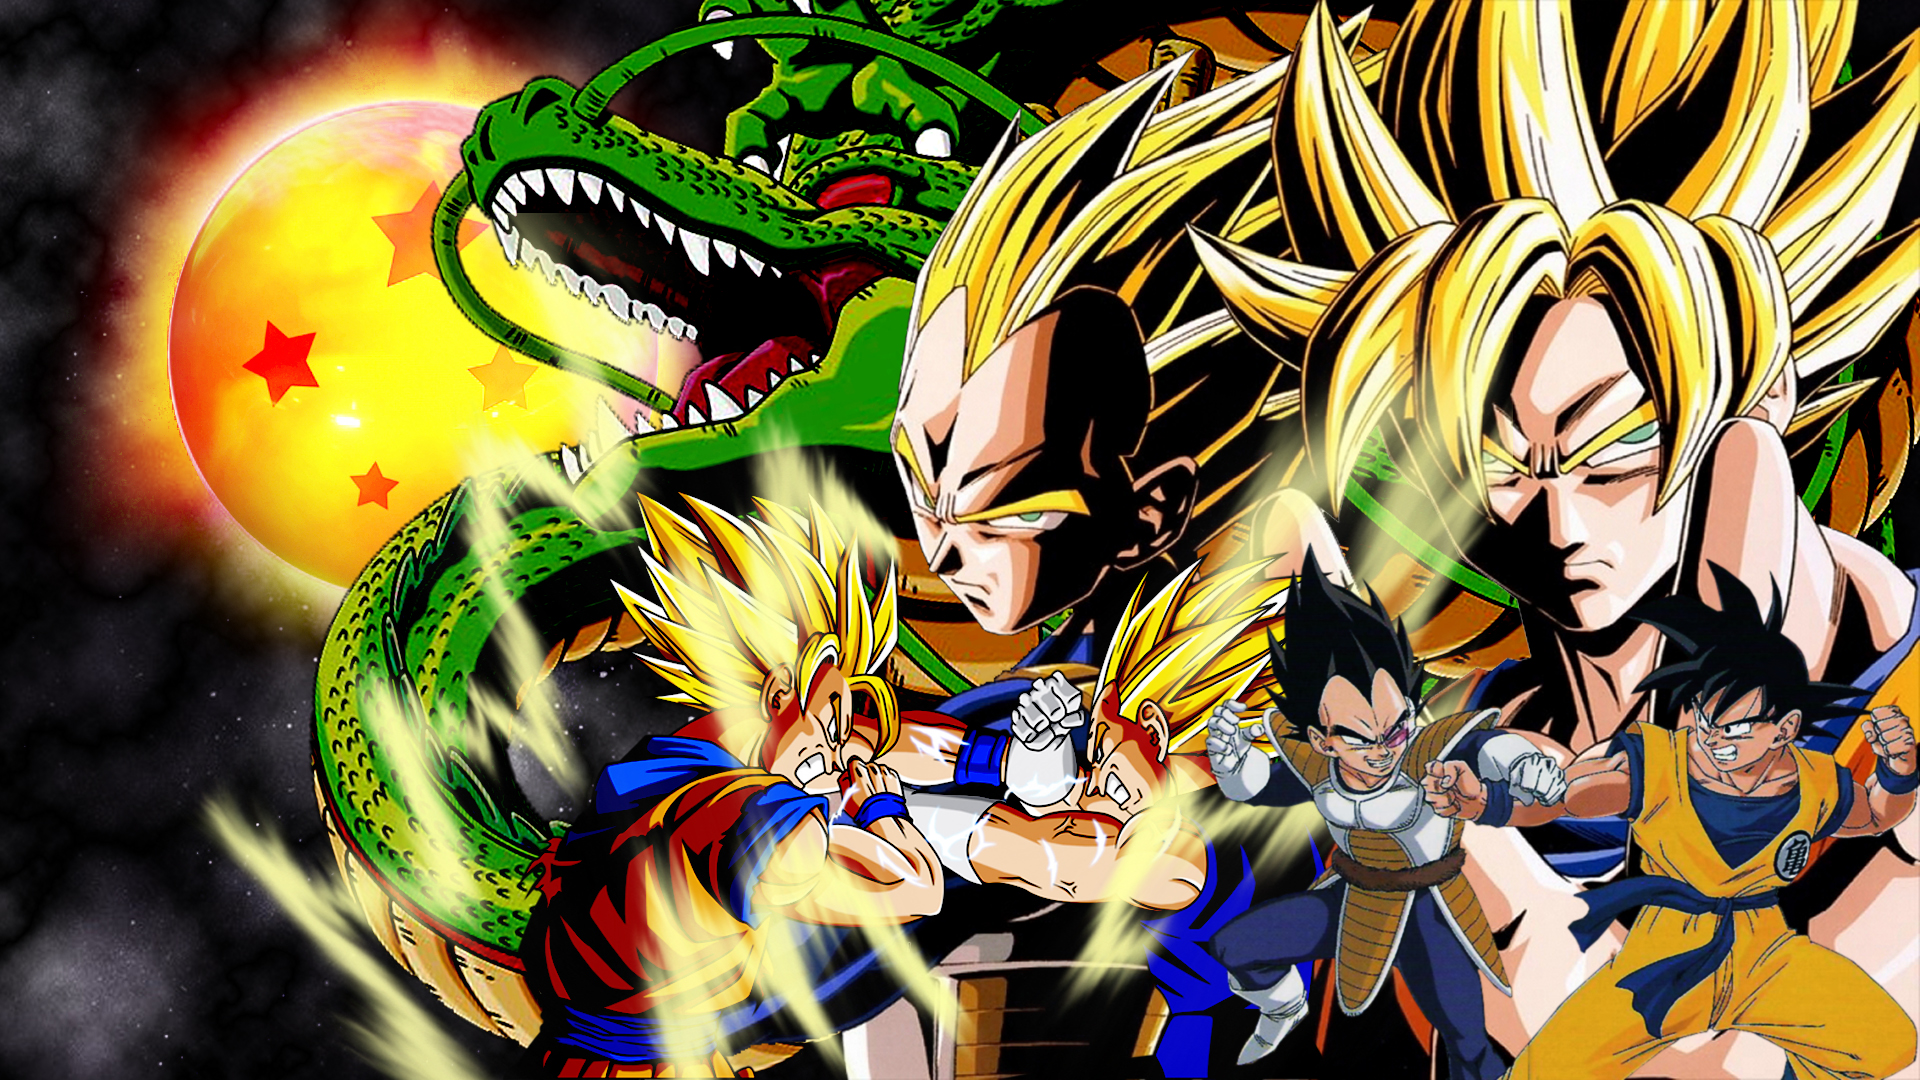 Goku Vs Vegeta Wallpaper By Vulc4no